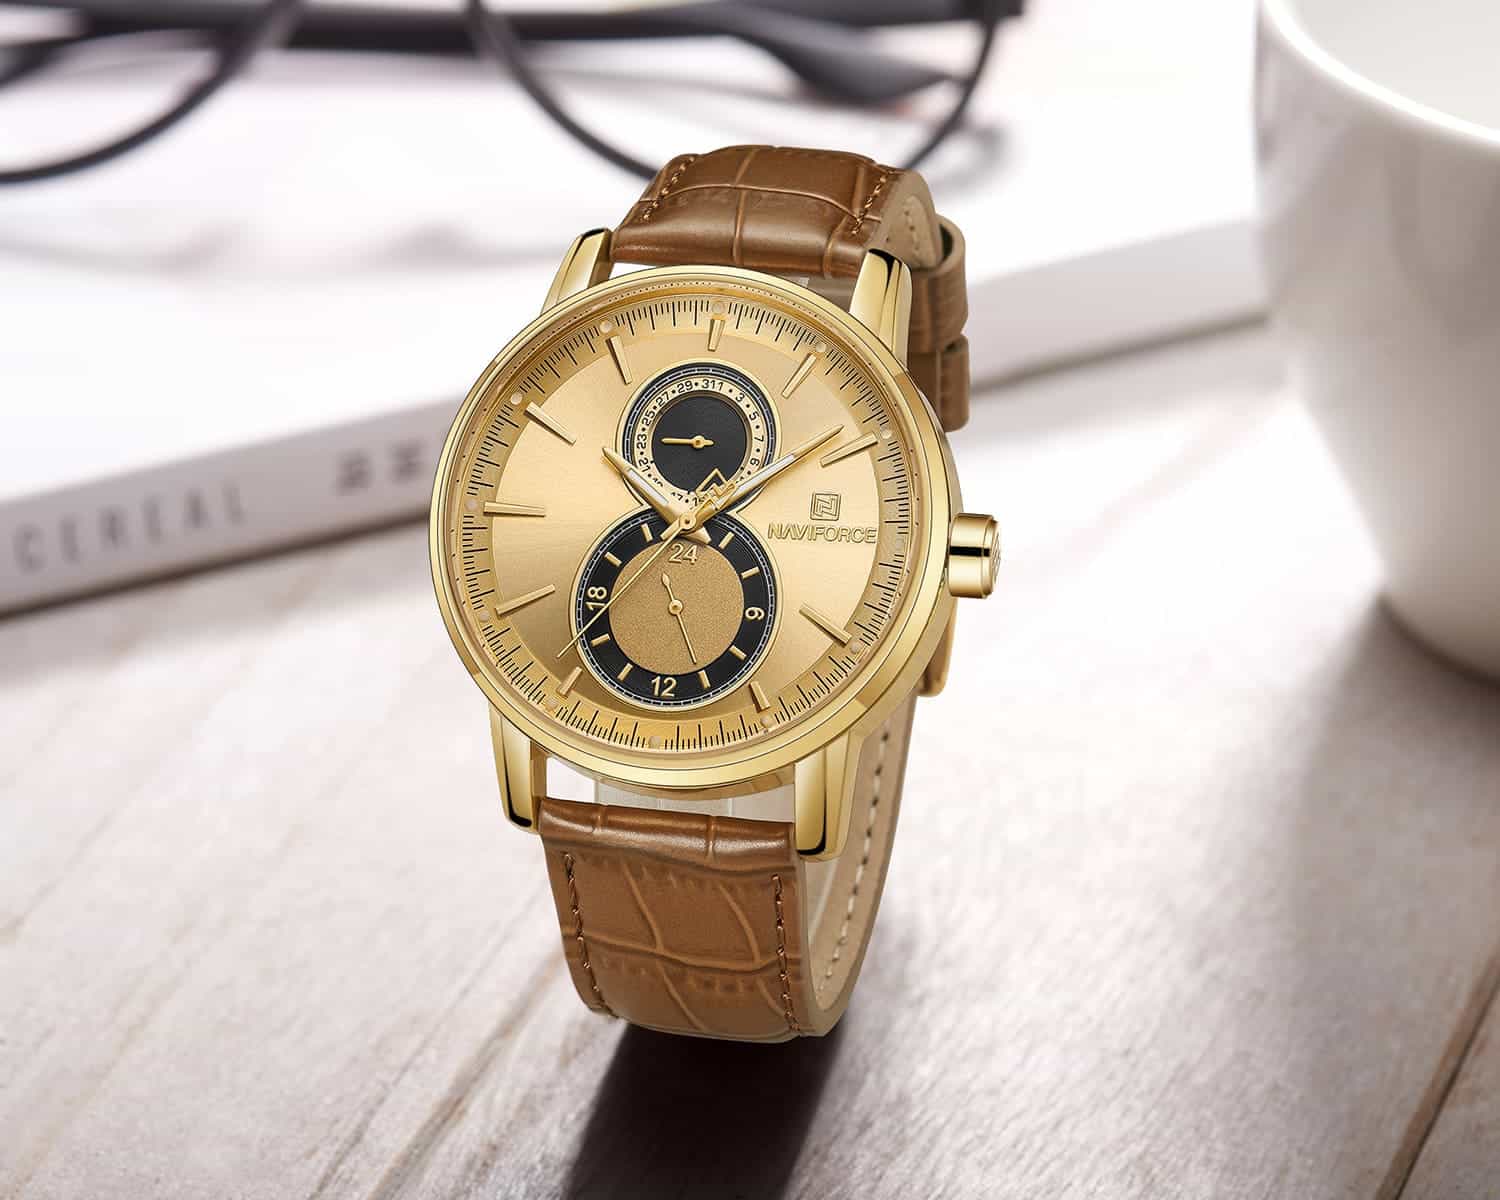 Naviforce Men's Watch NF3005 G G L BN | Watches Prime